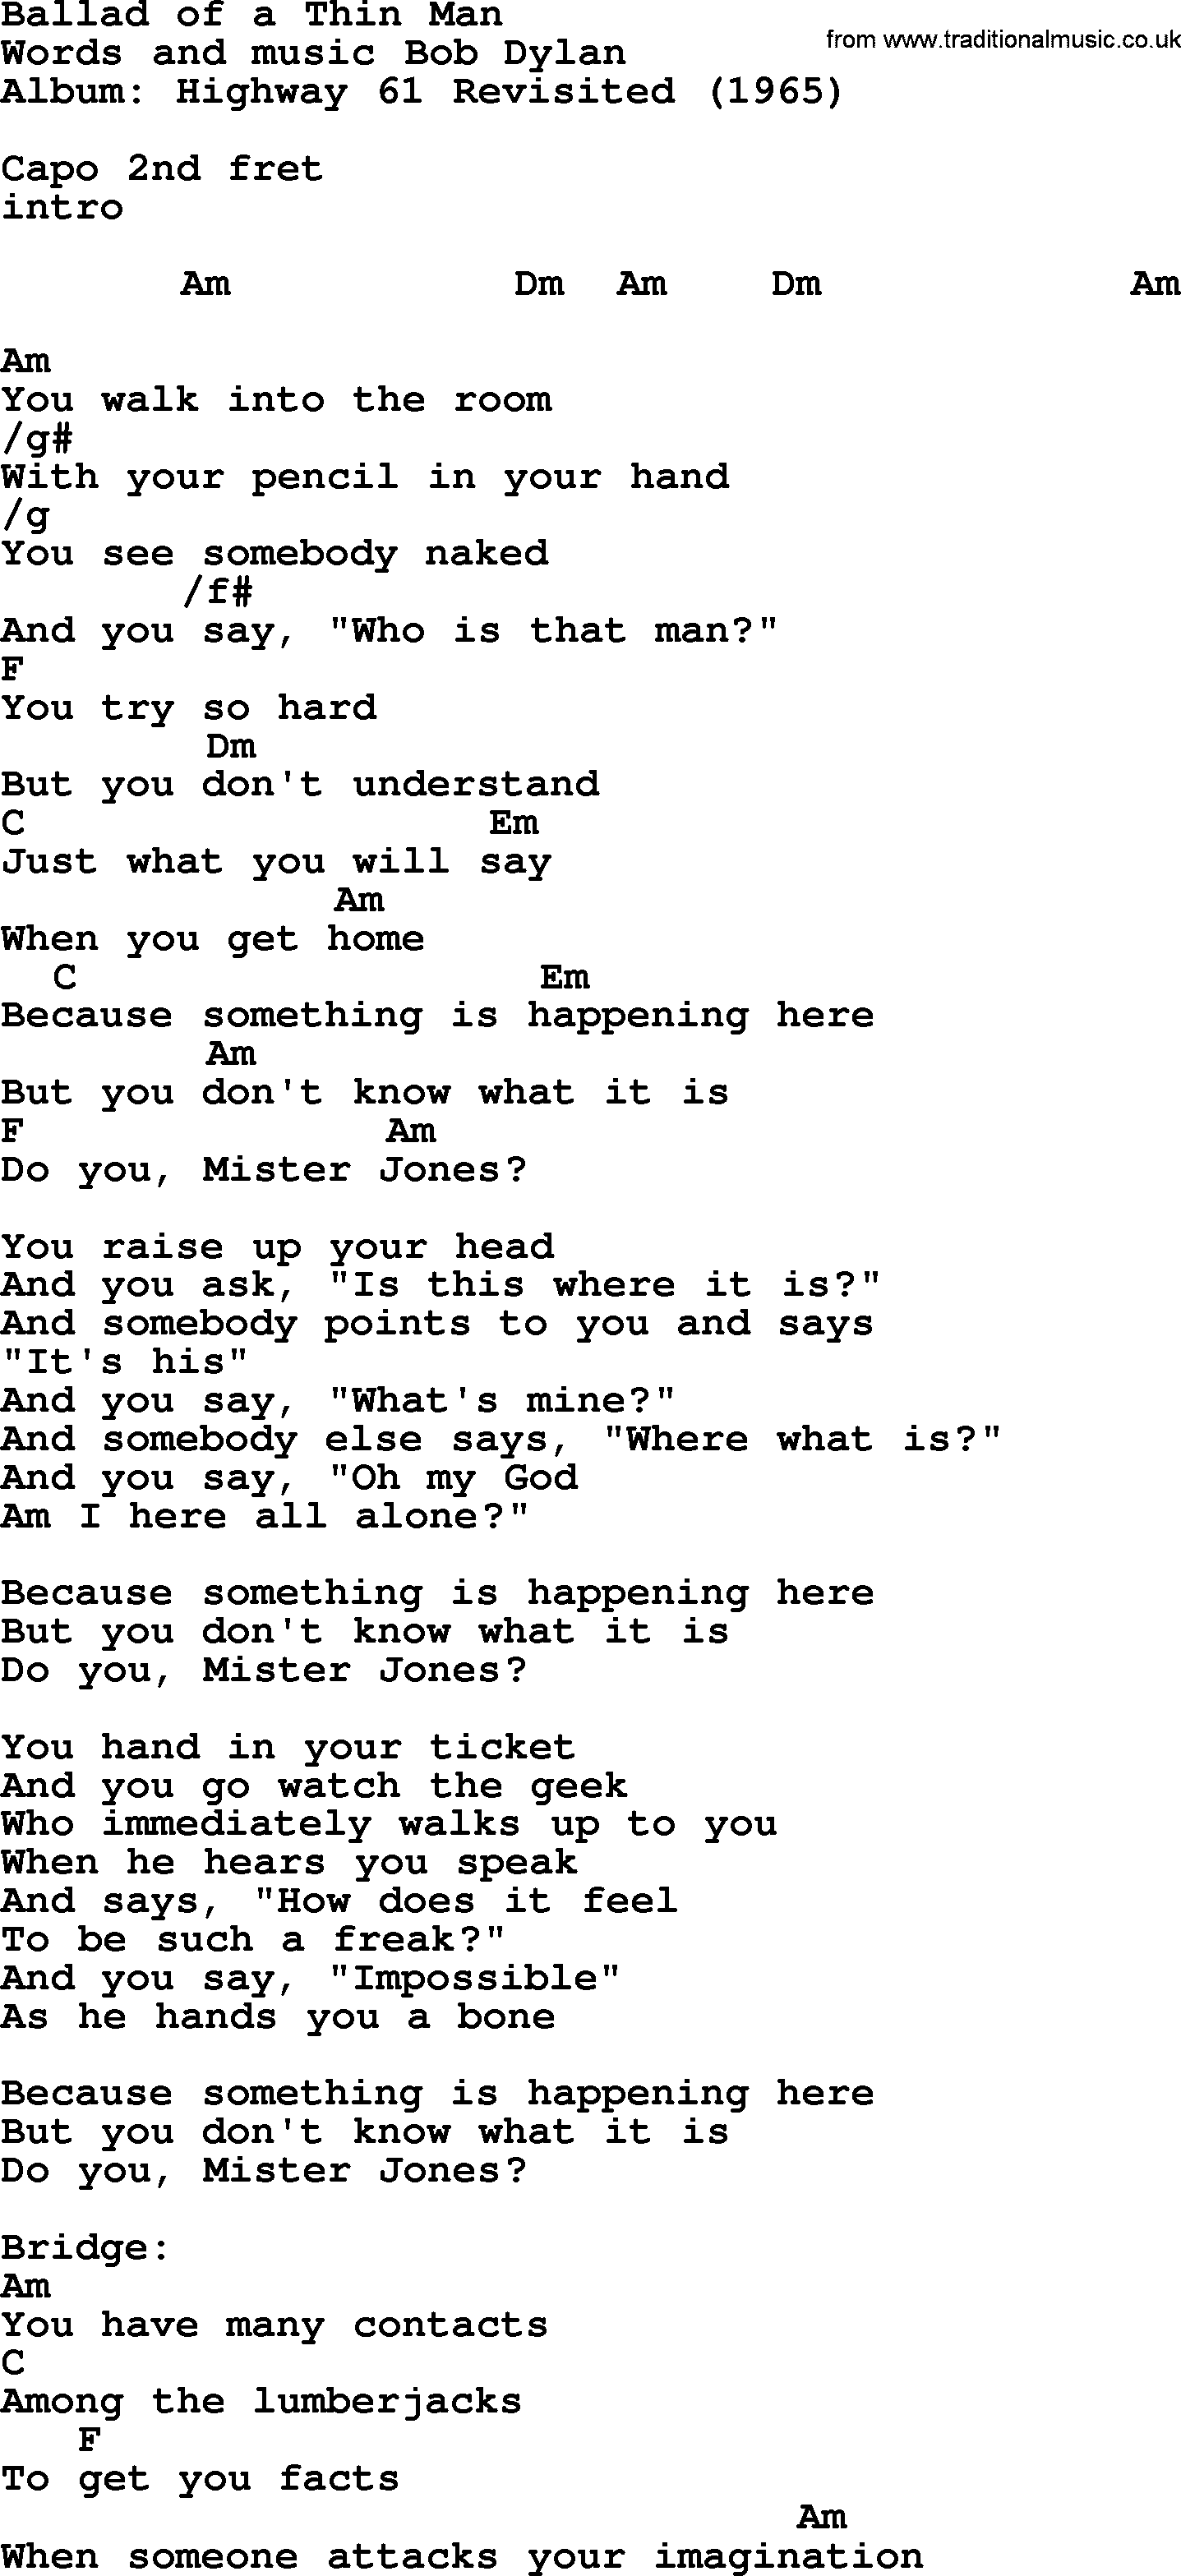 Bob Dylan song, lyrics with chords - Ballad of a Thin Man